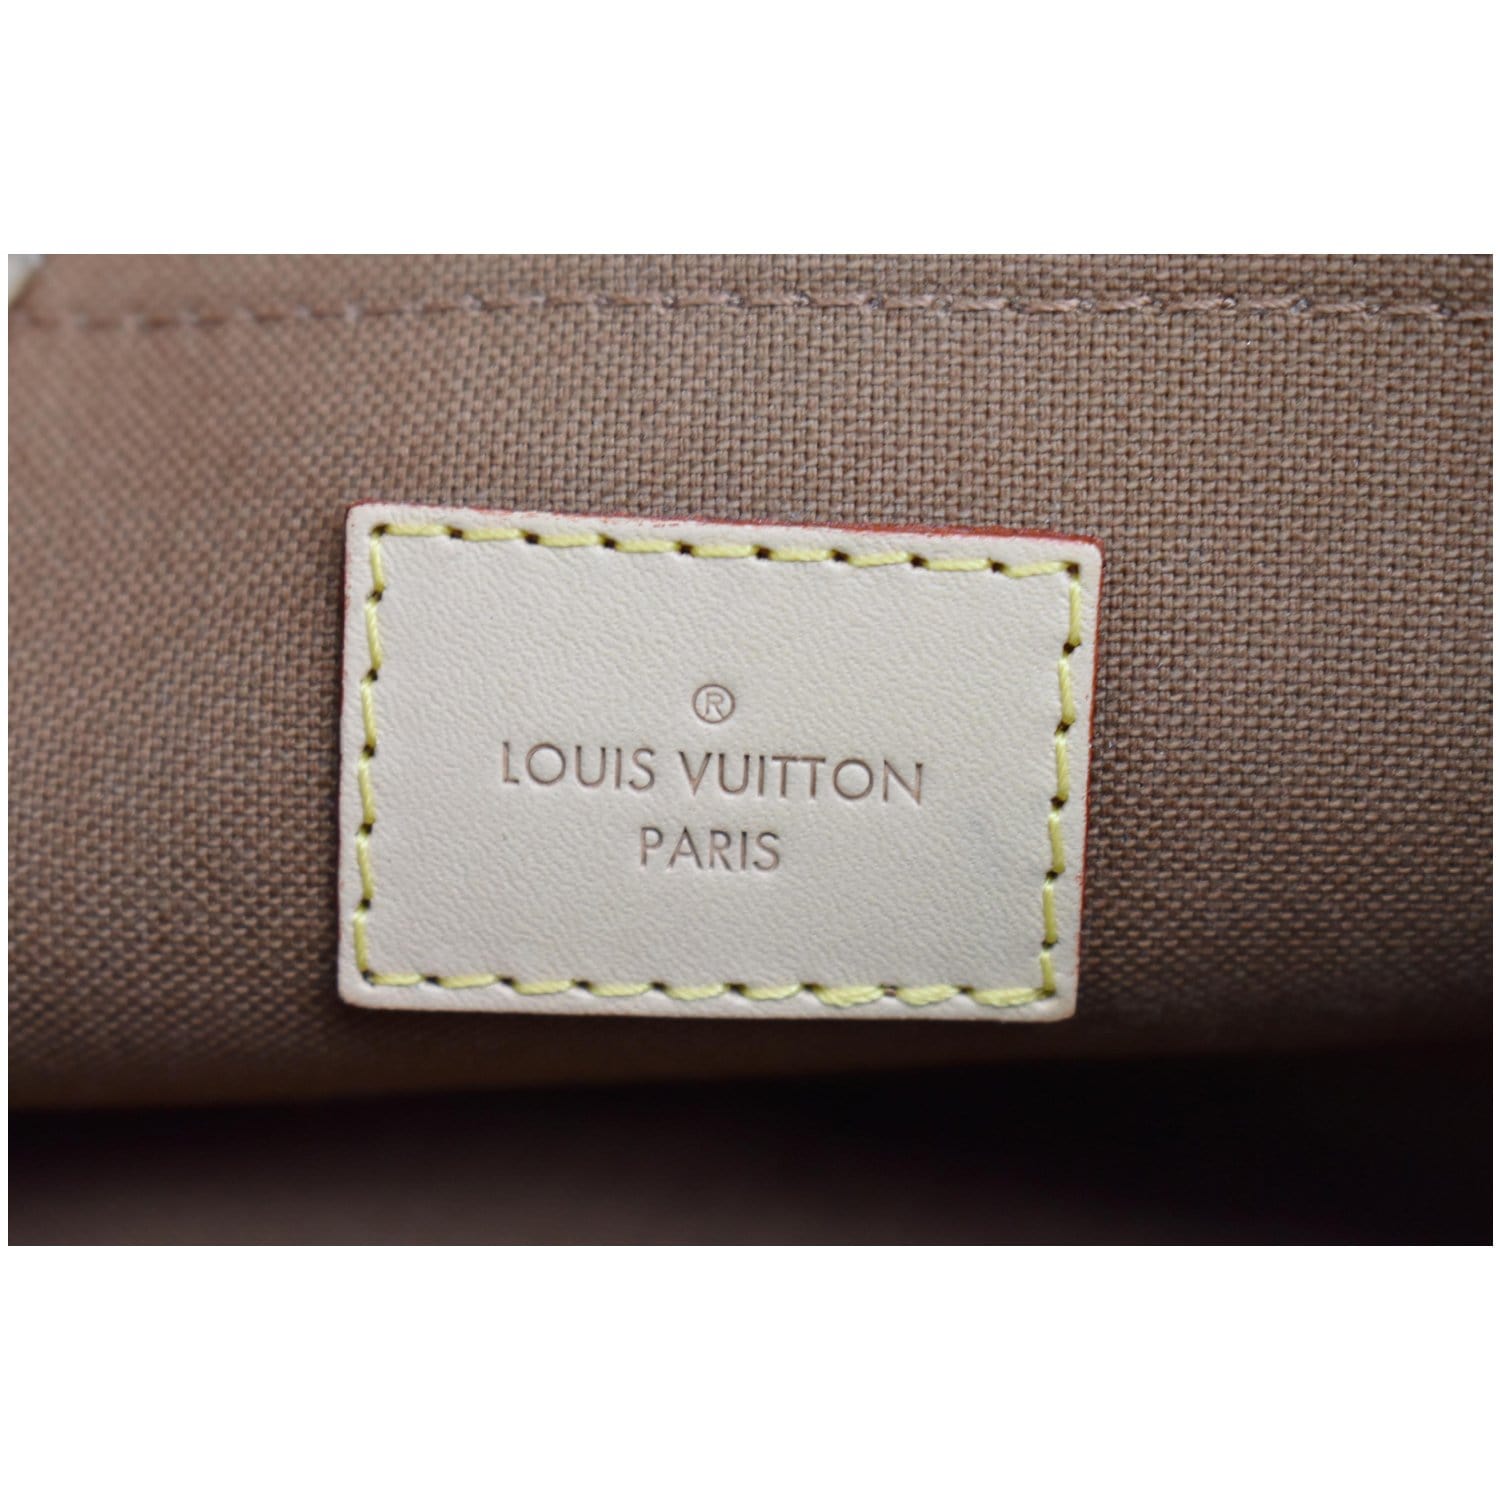 FWRD Renew Louis Vuitton Multi Pochette Accessories Shoulder Bag in White